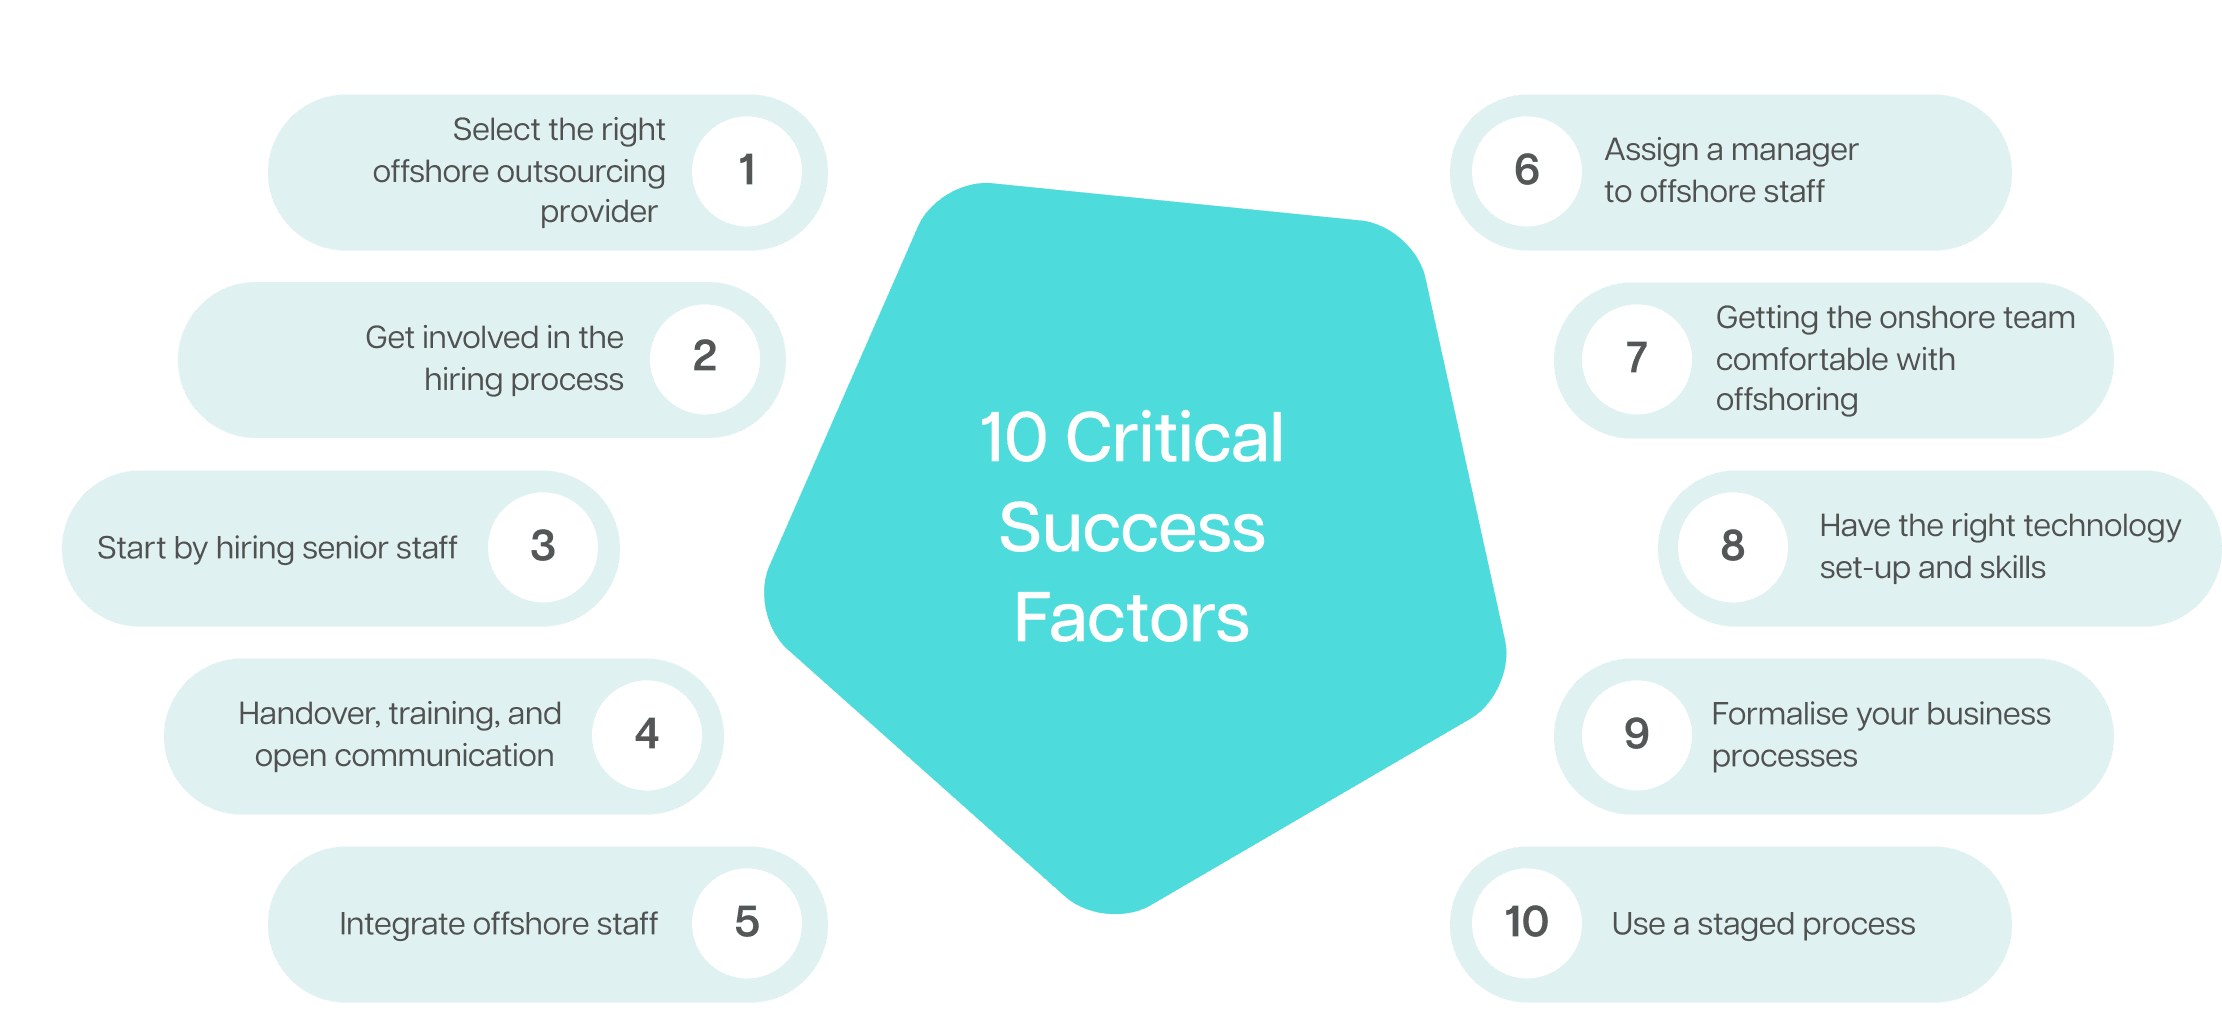 10-critical-success-factors-for-offshore outsourcing